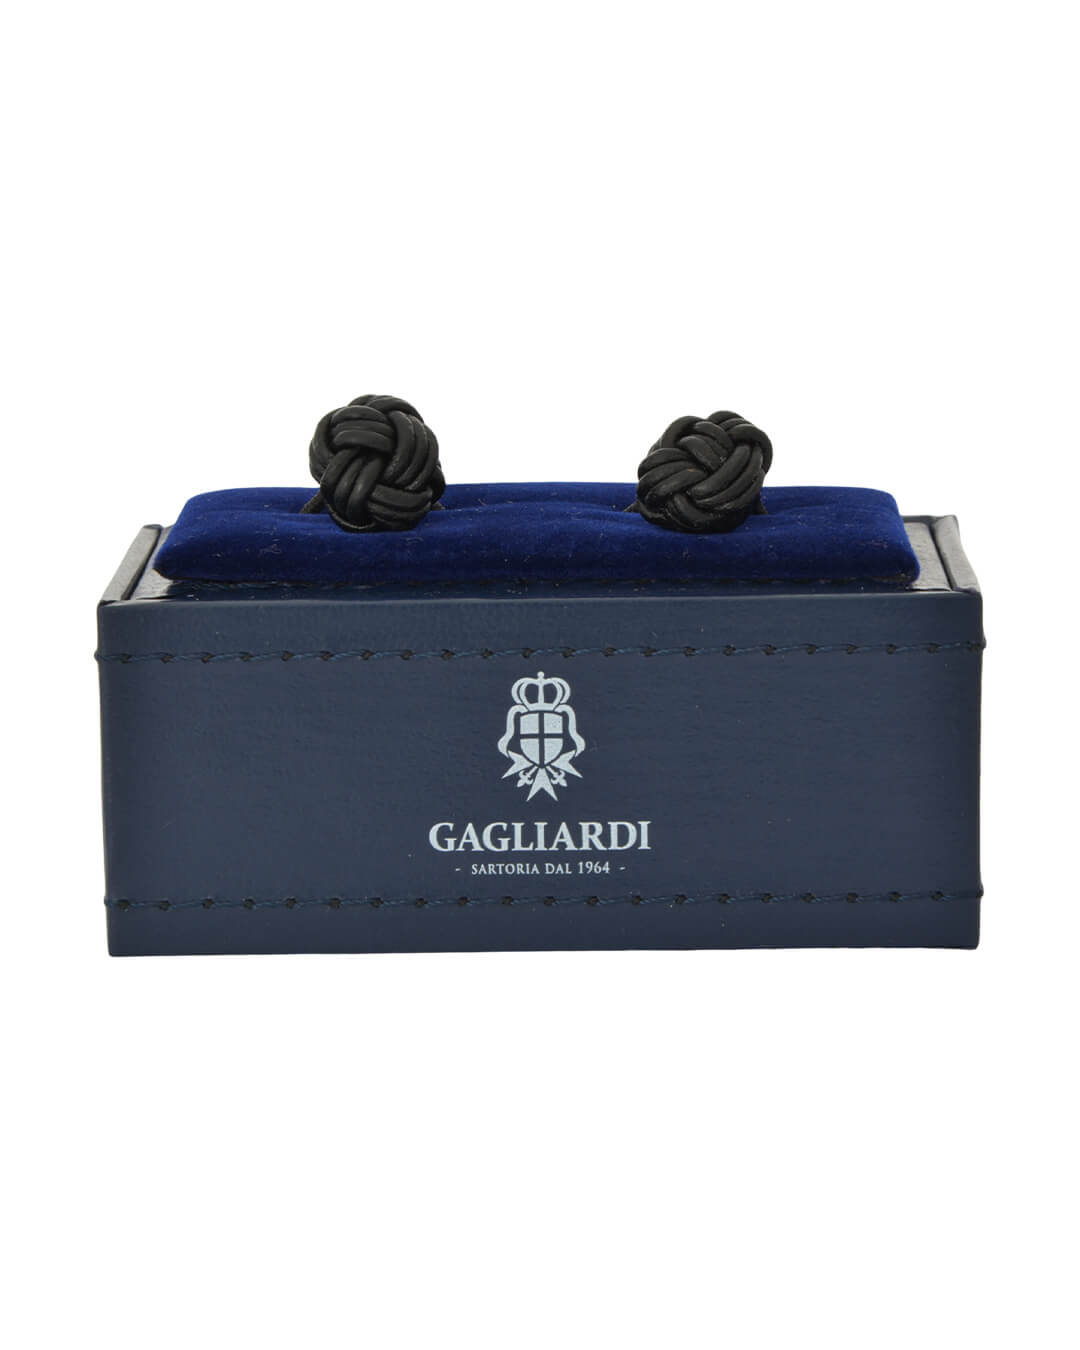 Gagliardi Cufflinks Gagliardi Shiny Rhodium With Black Leather Knot Cufflinks